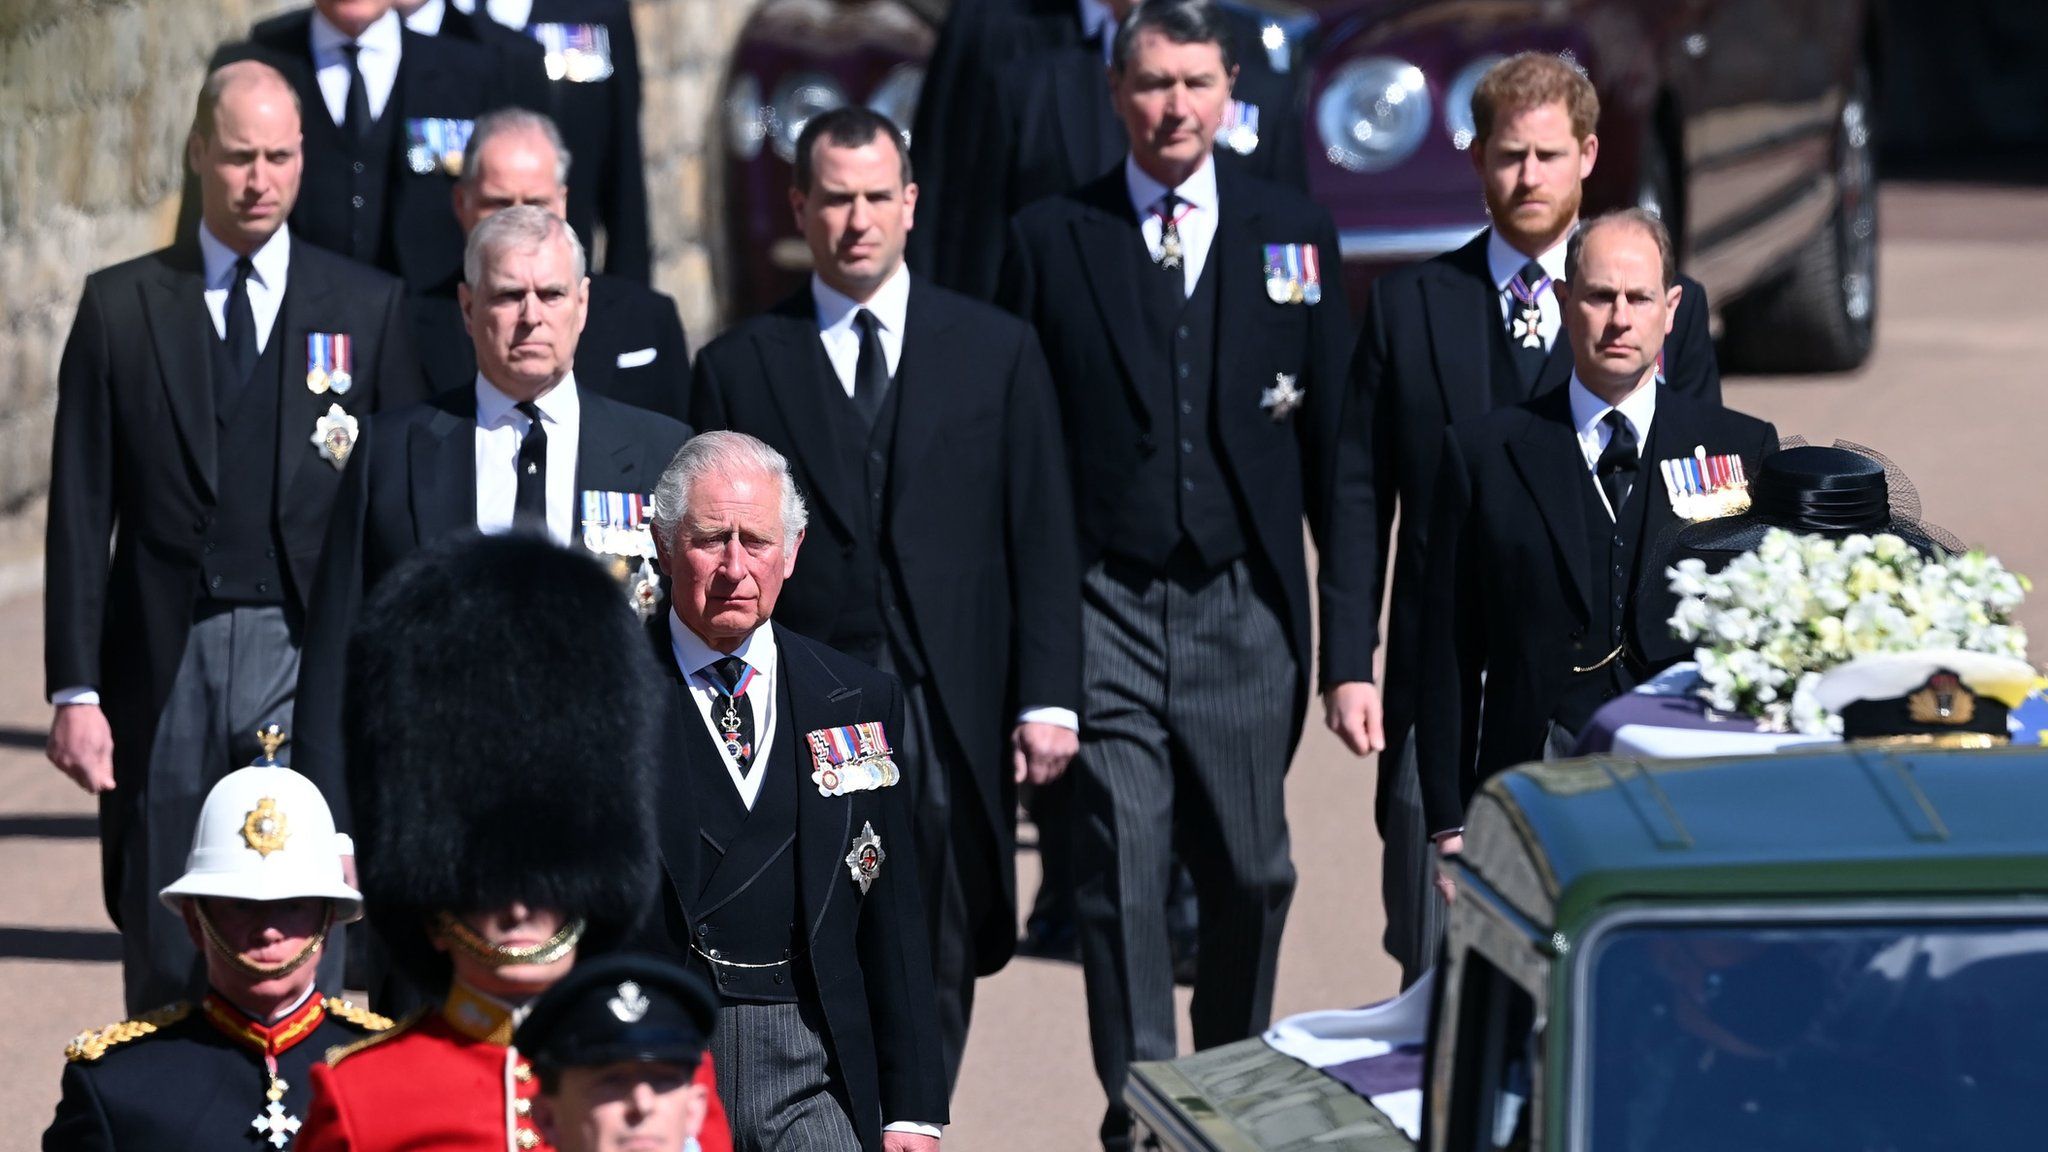 Royal family members at the funeral